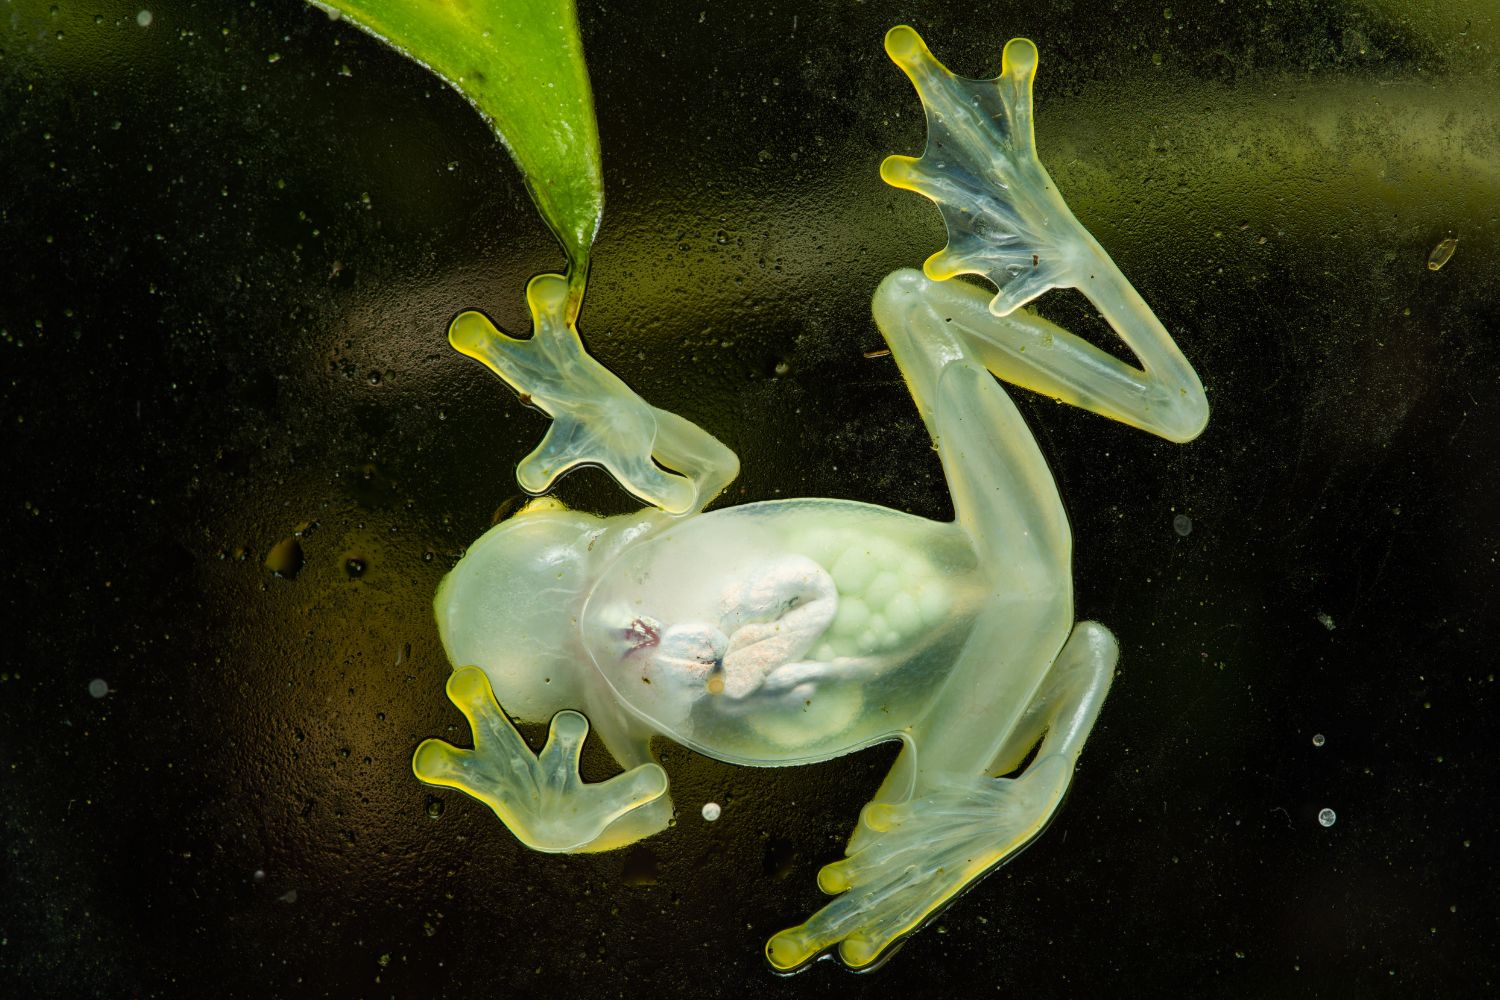 3. Glass Frog